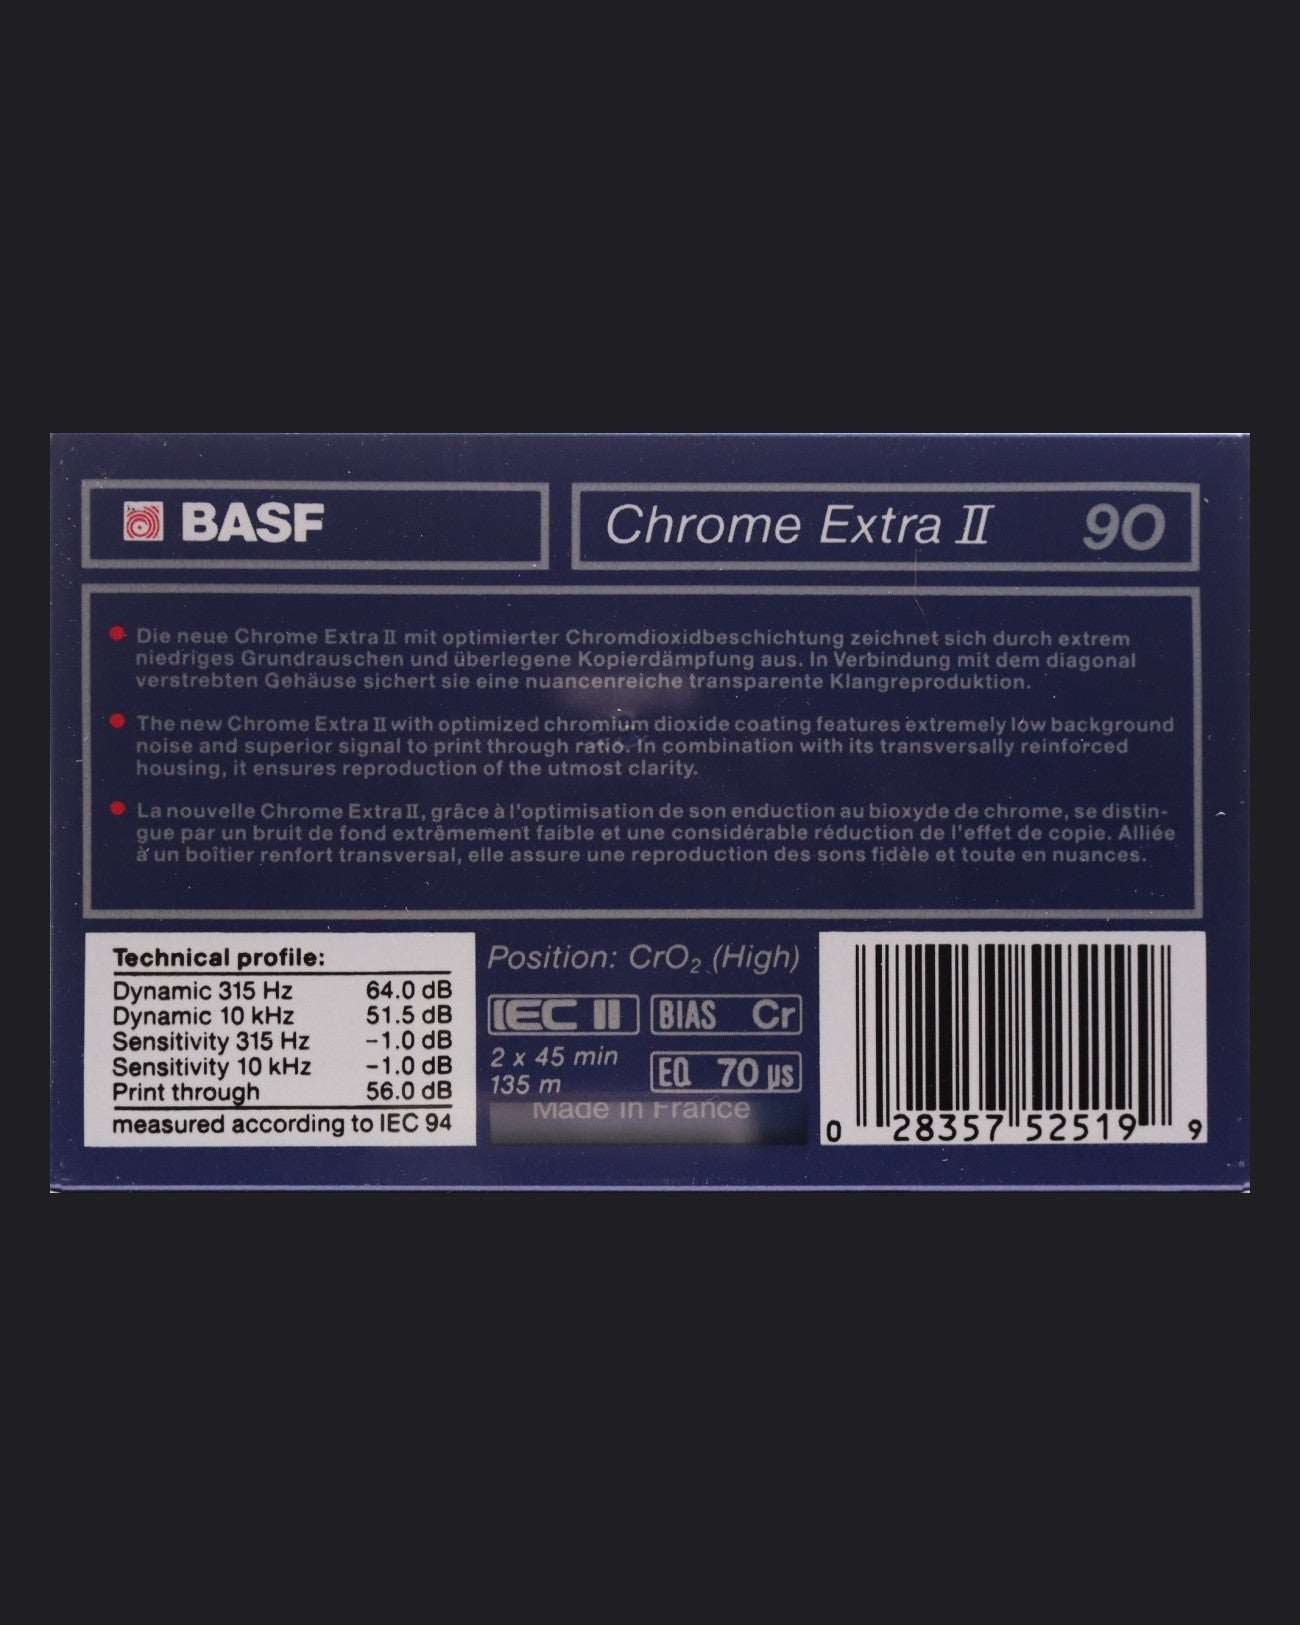 BASF Chrome Extra II (1989-1990)